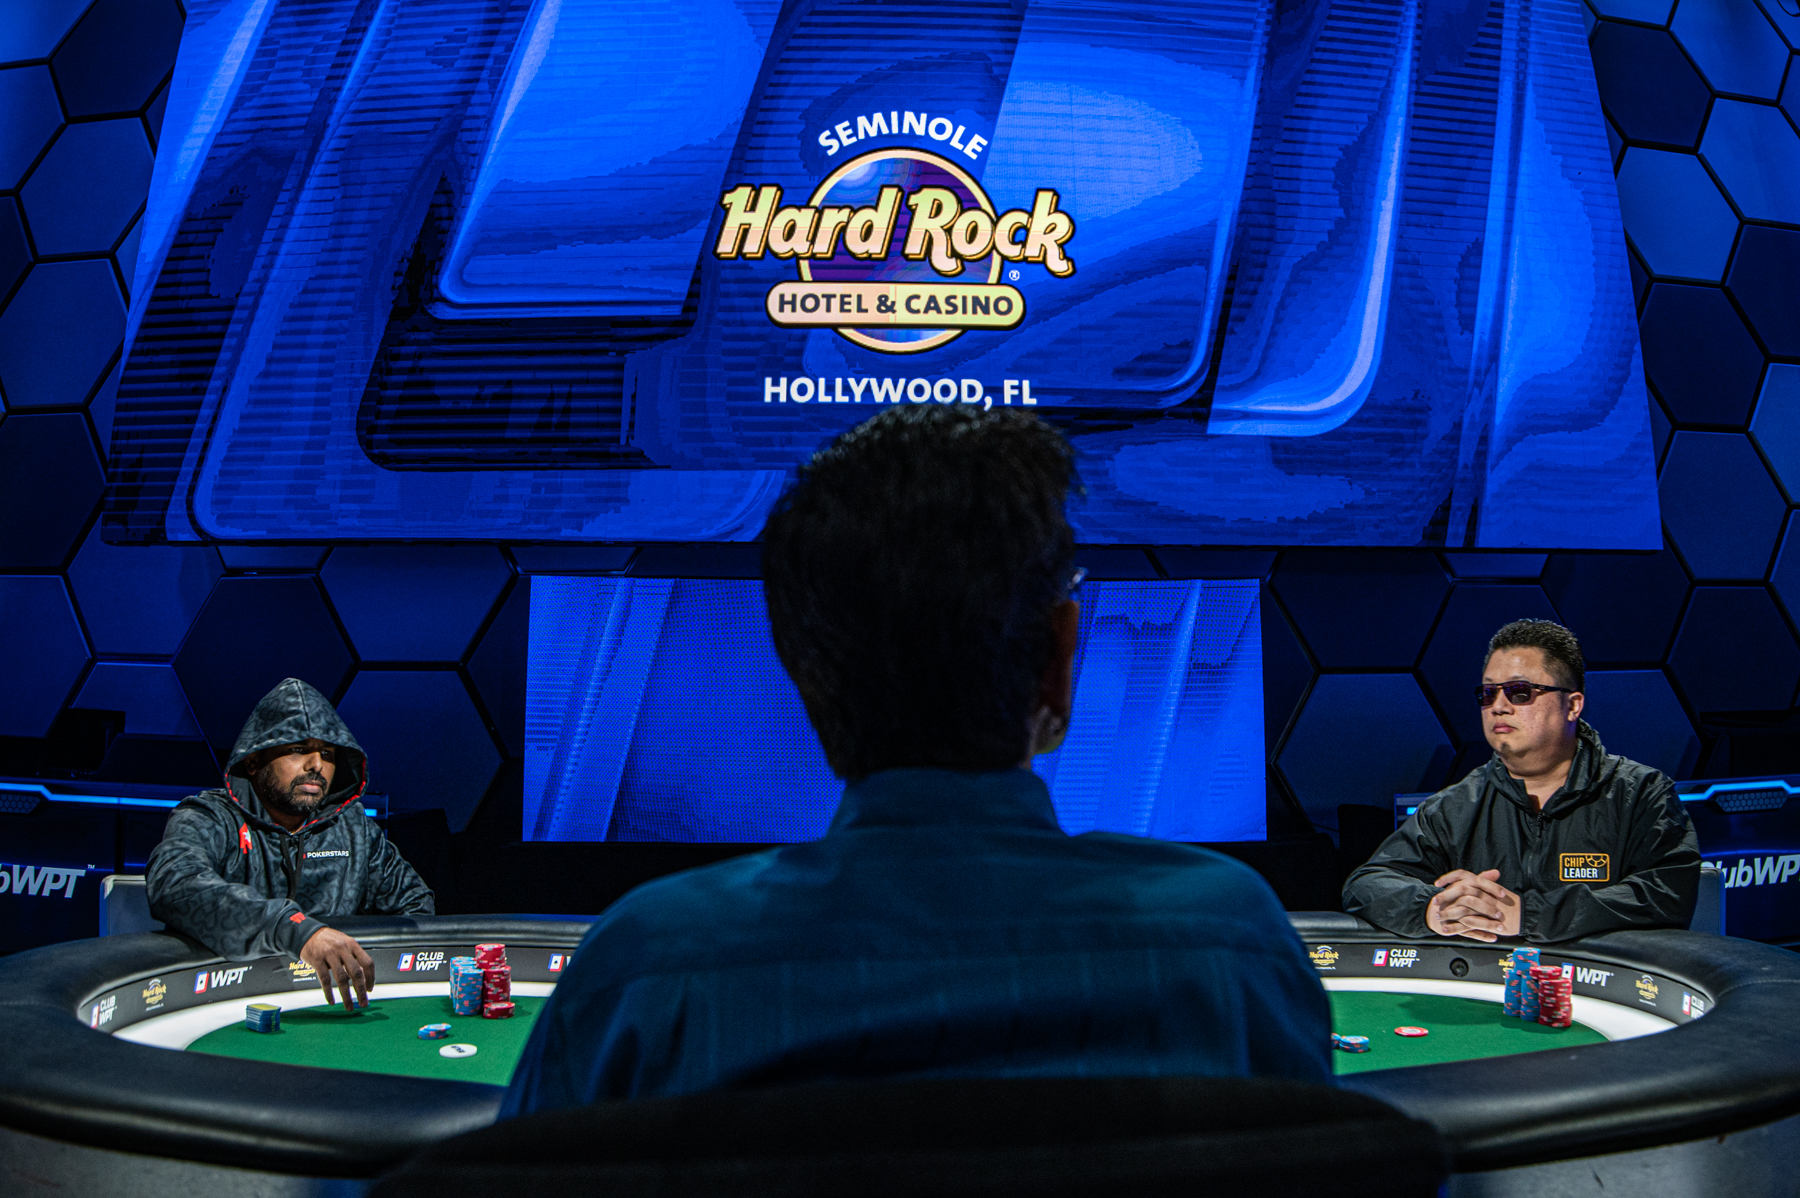 S16 › WPT Seminole Hard Rock Poker Showdown (Part 1 of 3) › PREVIEW on Vimeo